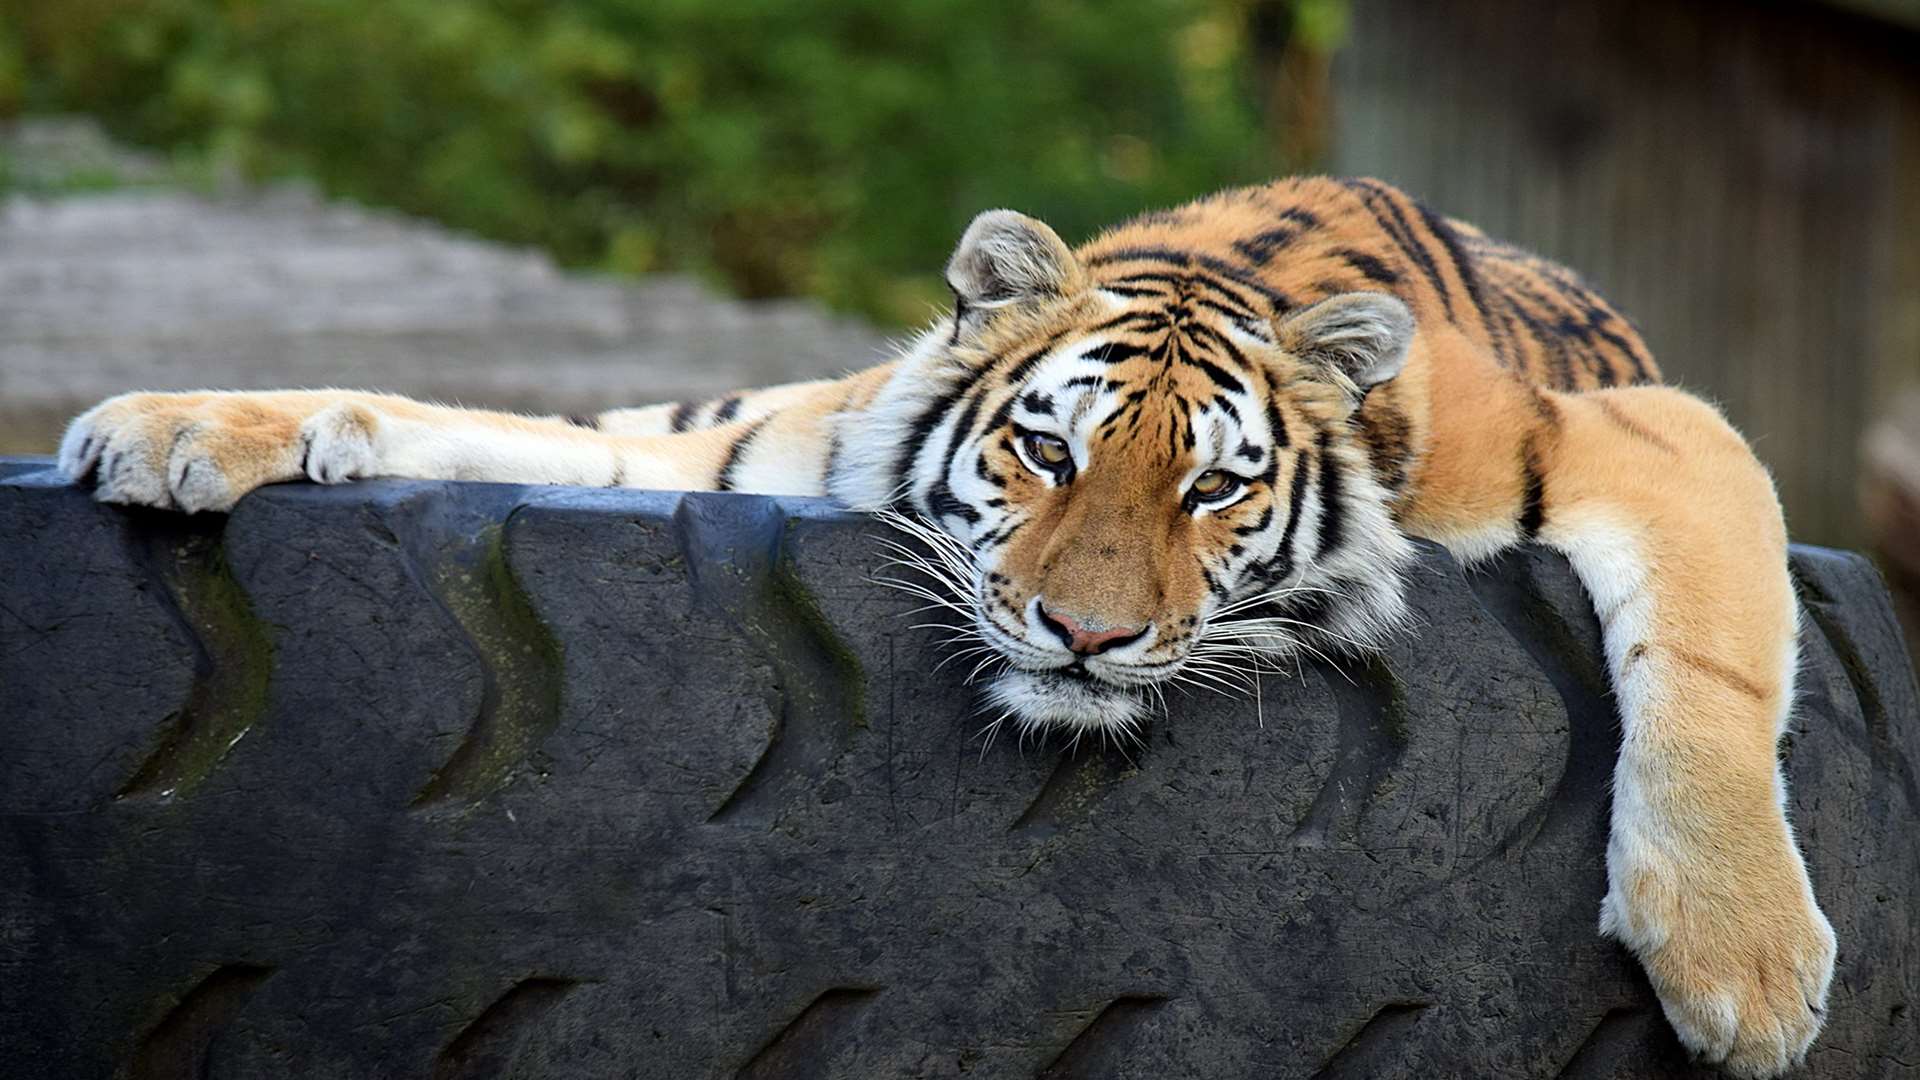 An Amur tiger at Howletts Wild Animal Park